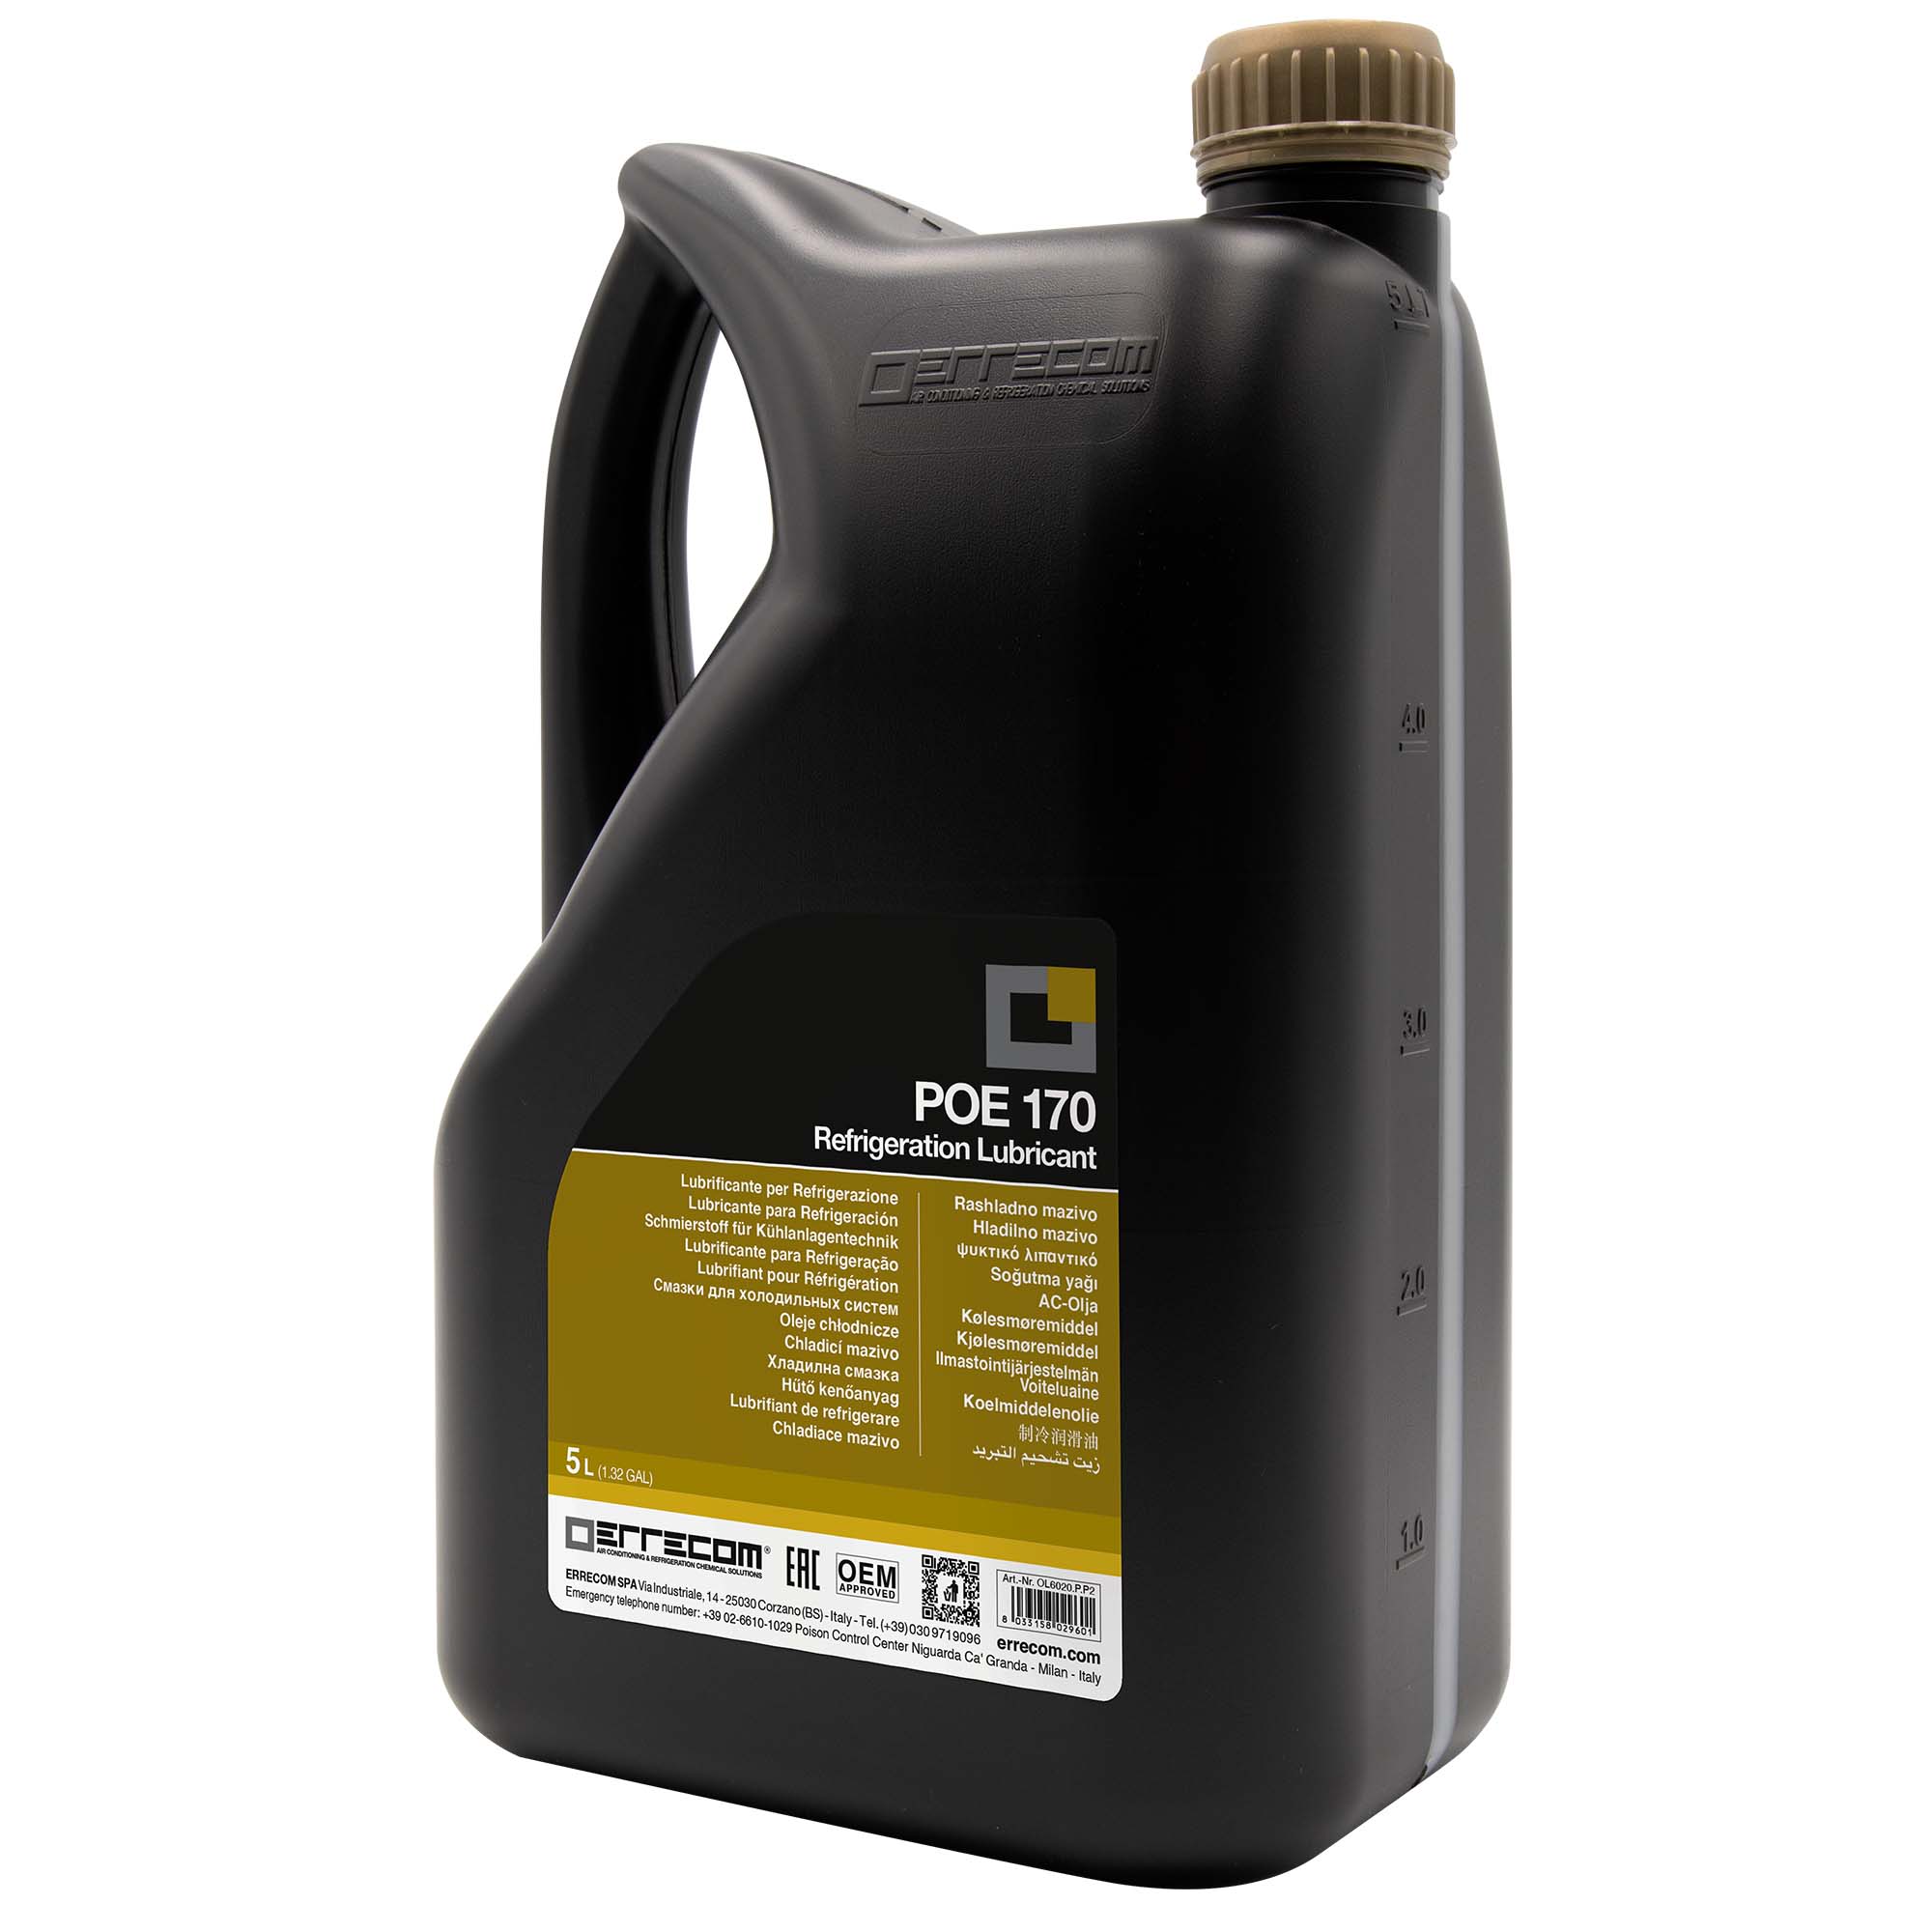 2 x R&AC Polyol Ester (POE) lubricant oil Errecom 170 - Plastic Tank 5 lt. - Package # 2 pcs. (total 10 liters)